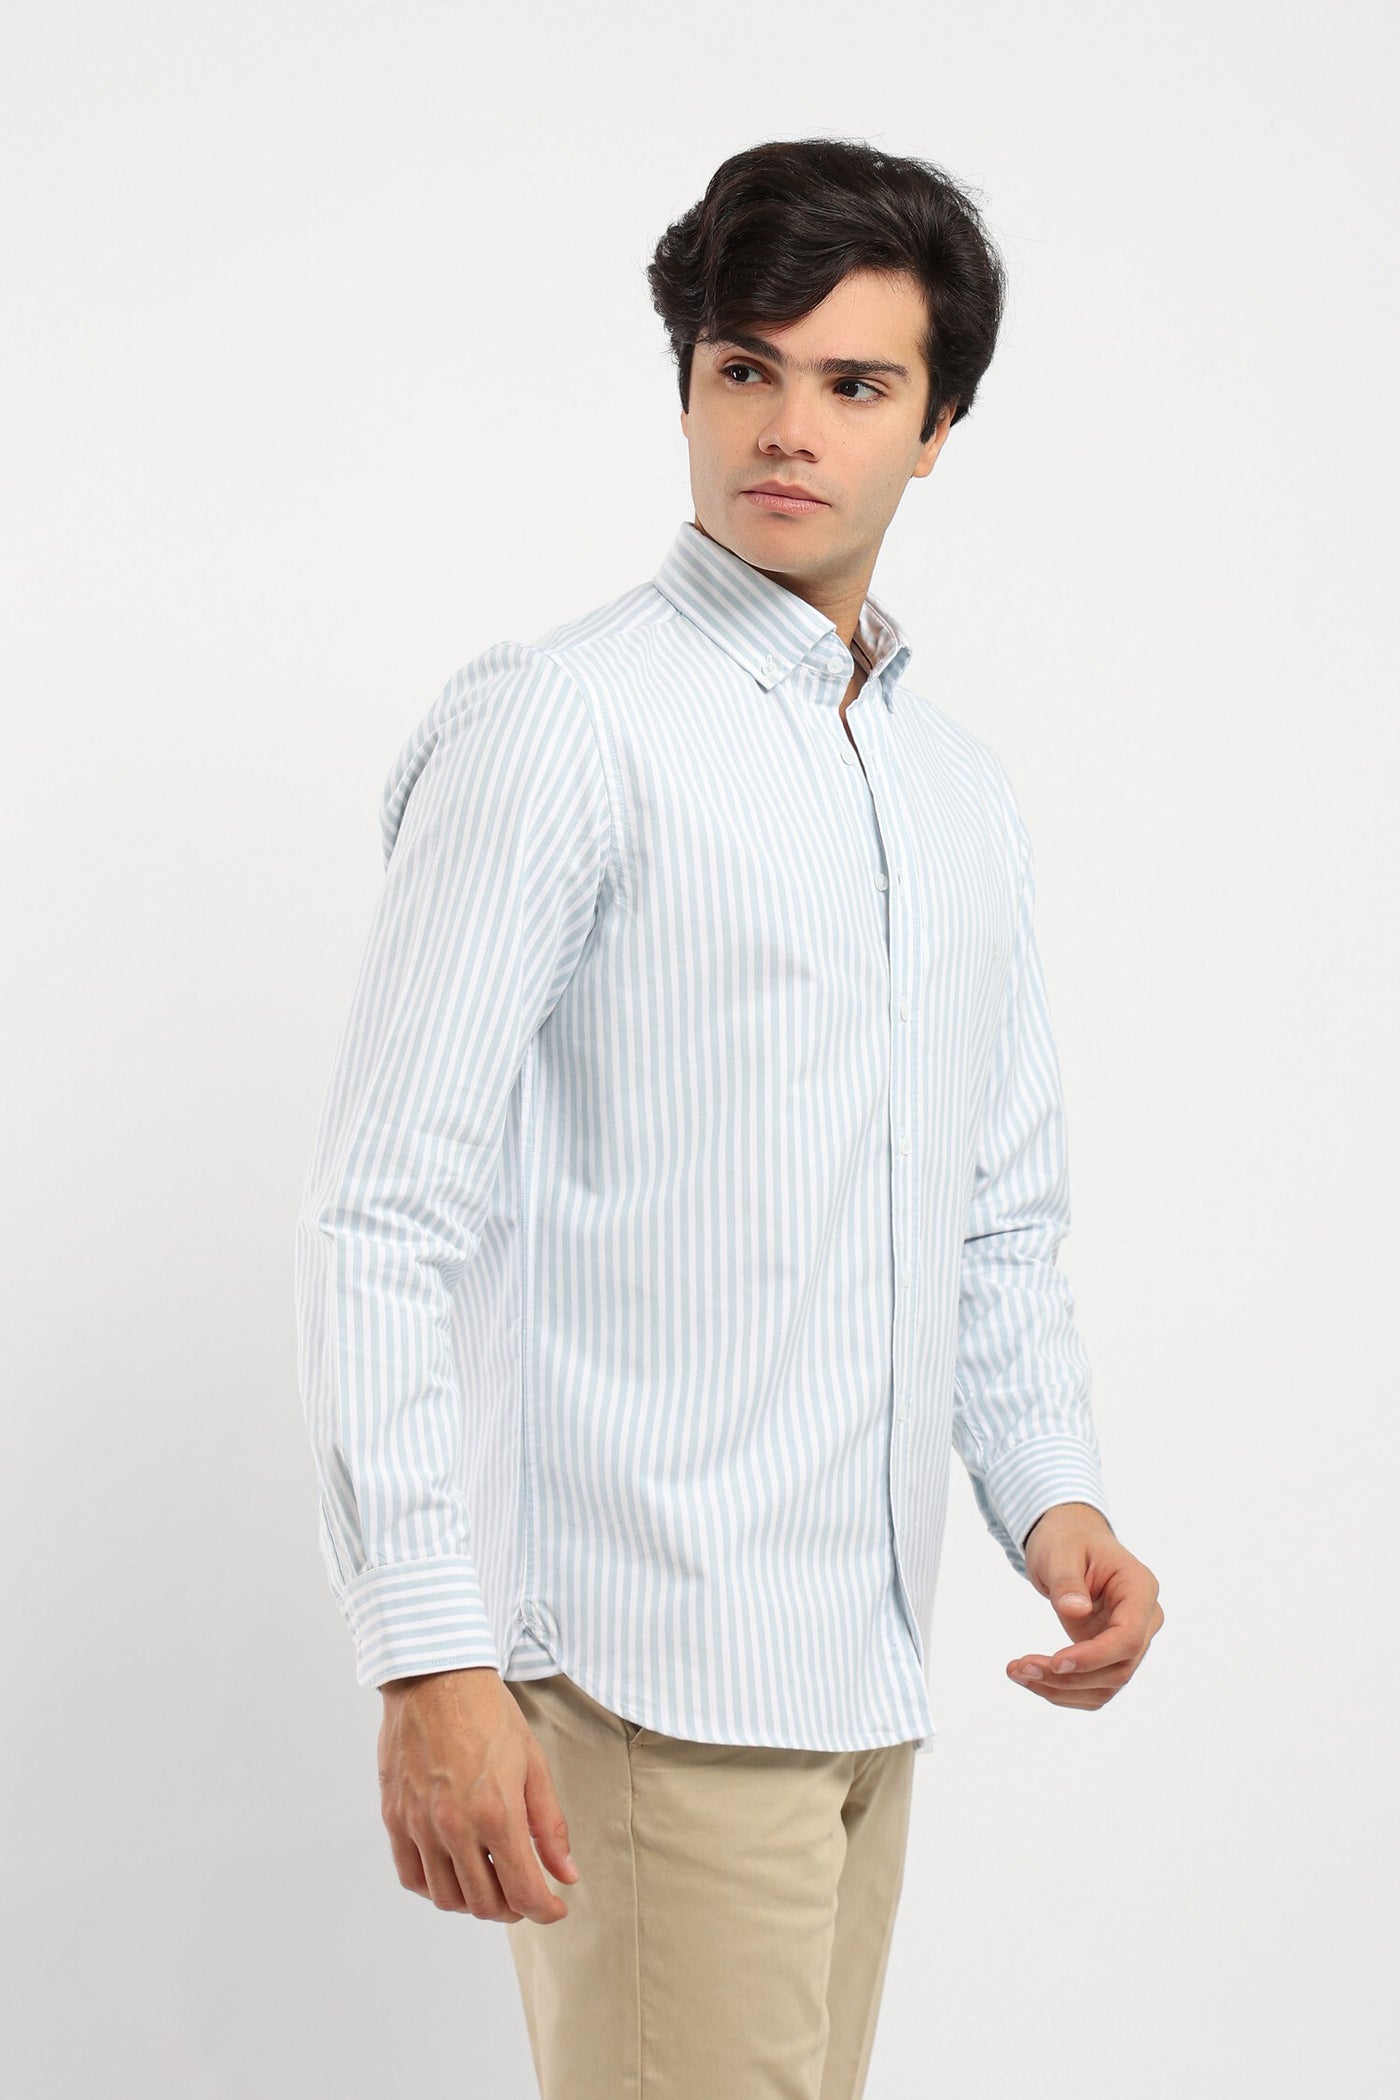 Shirts - Basic Oxford - Wide Striped